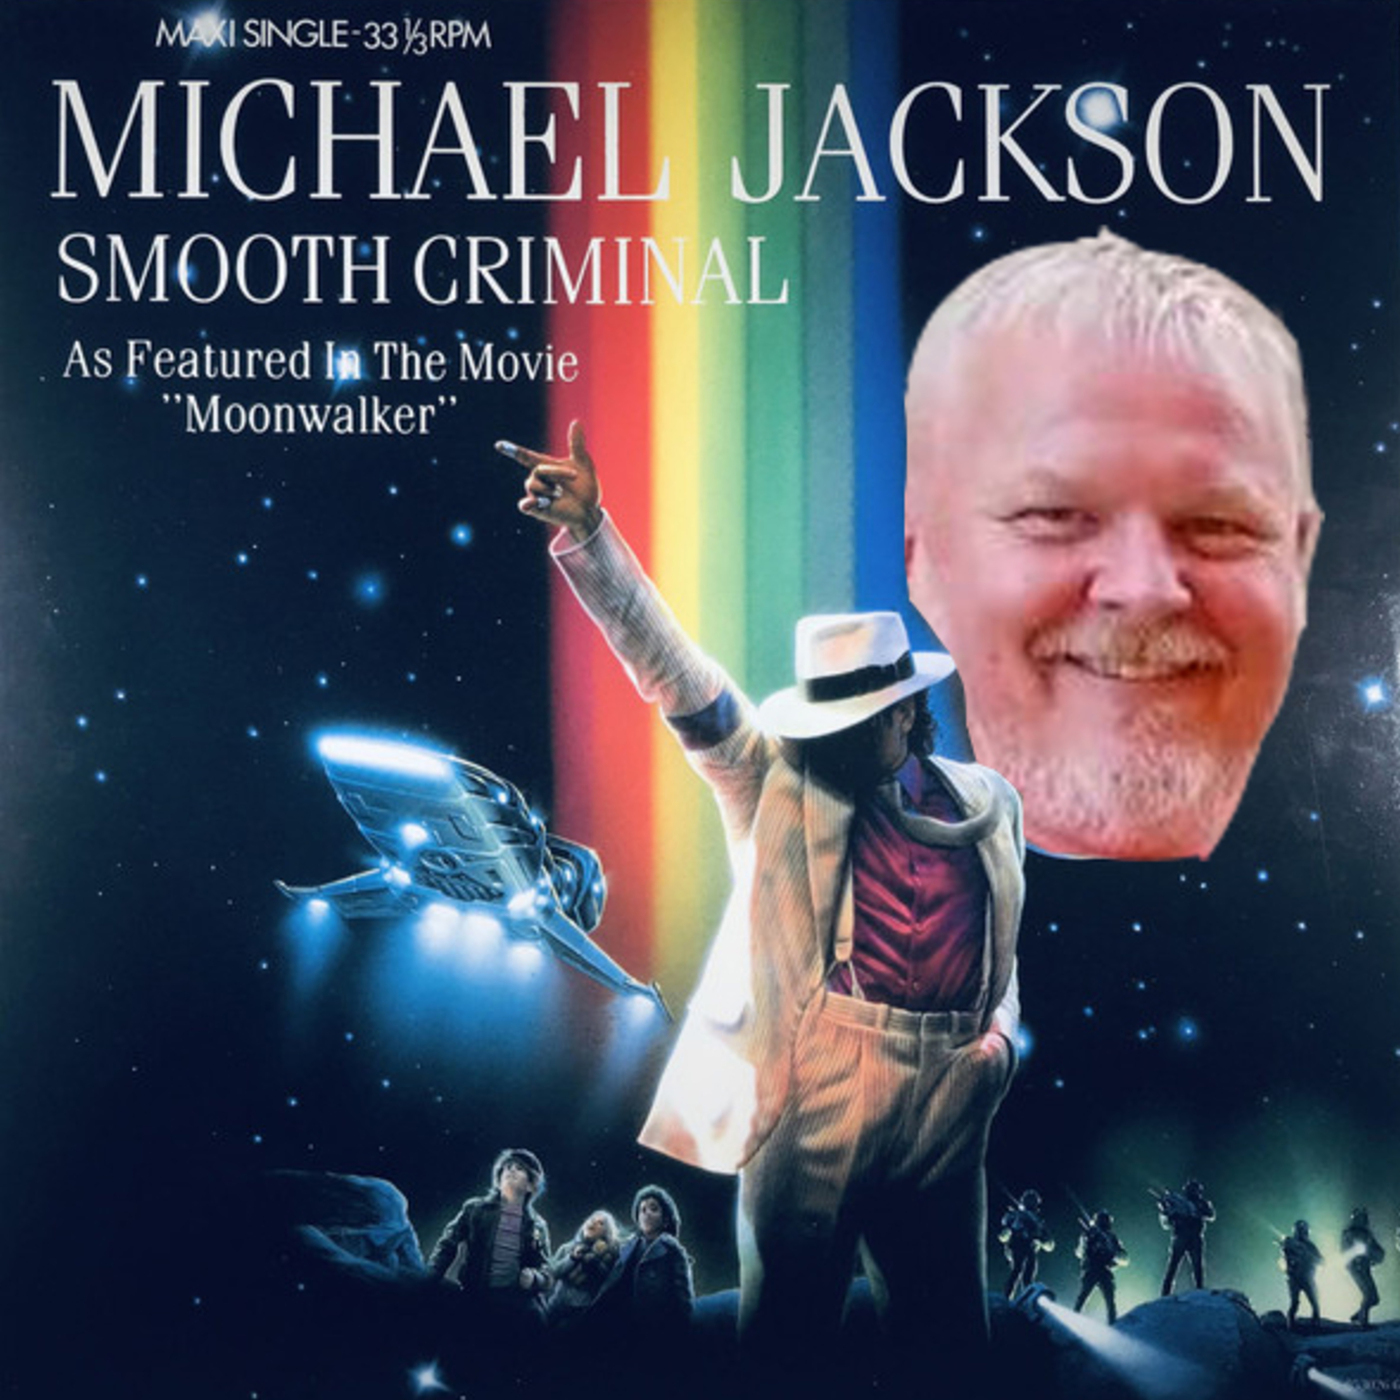 Lyrics To Go smoothcriminal: 101 - Smooth Criminal